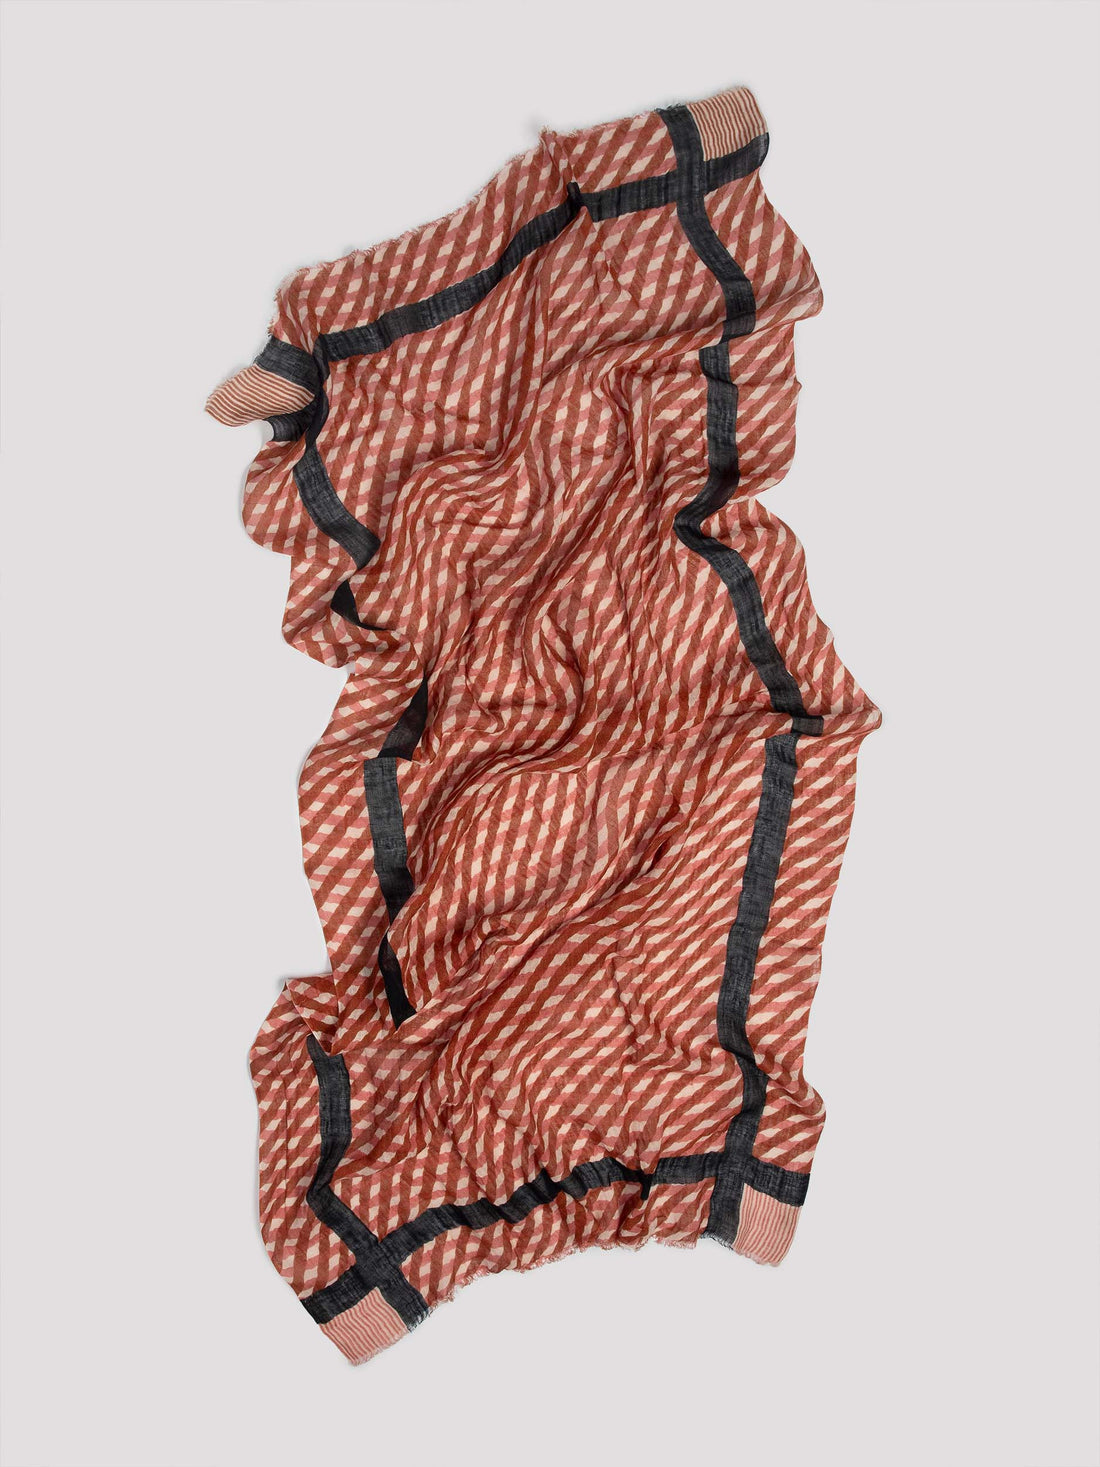 Asuan brown printed scarf - Lovat & Green